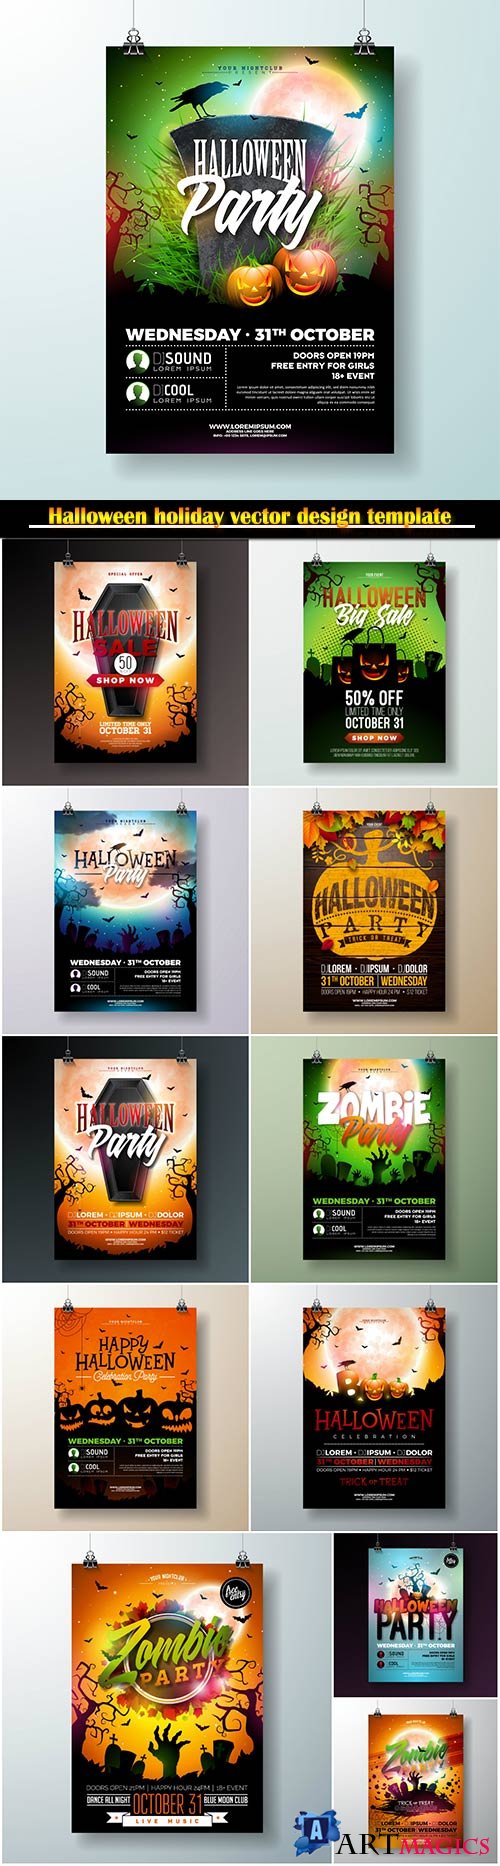 Halloween holiday vector design template